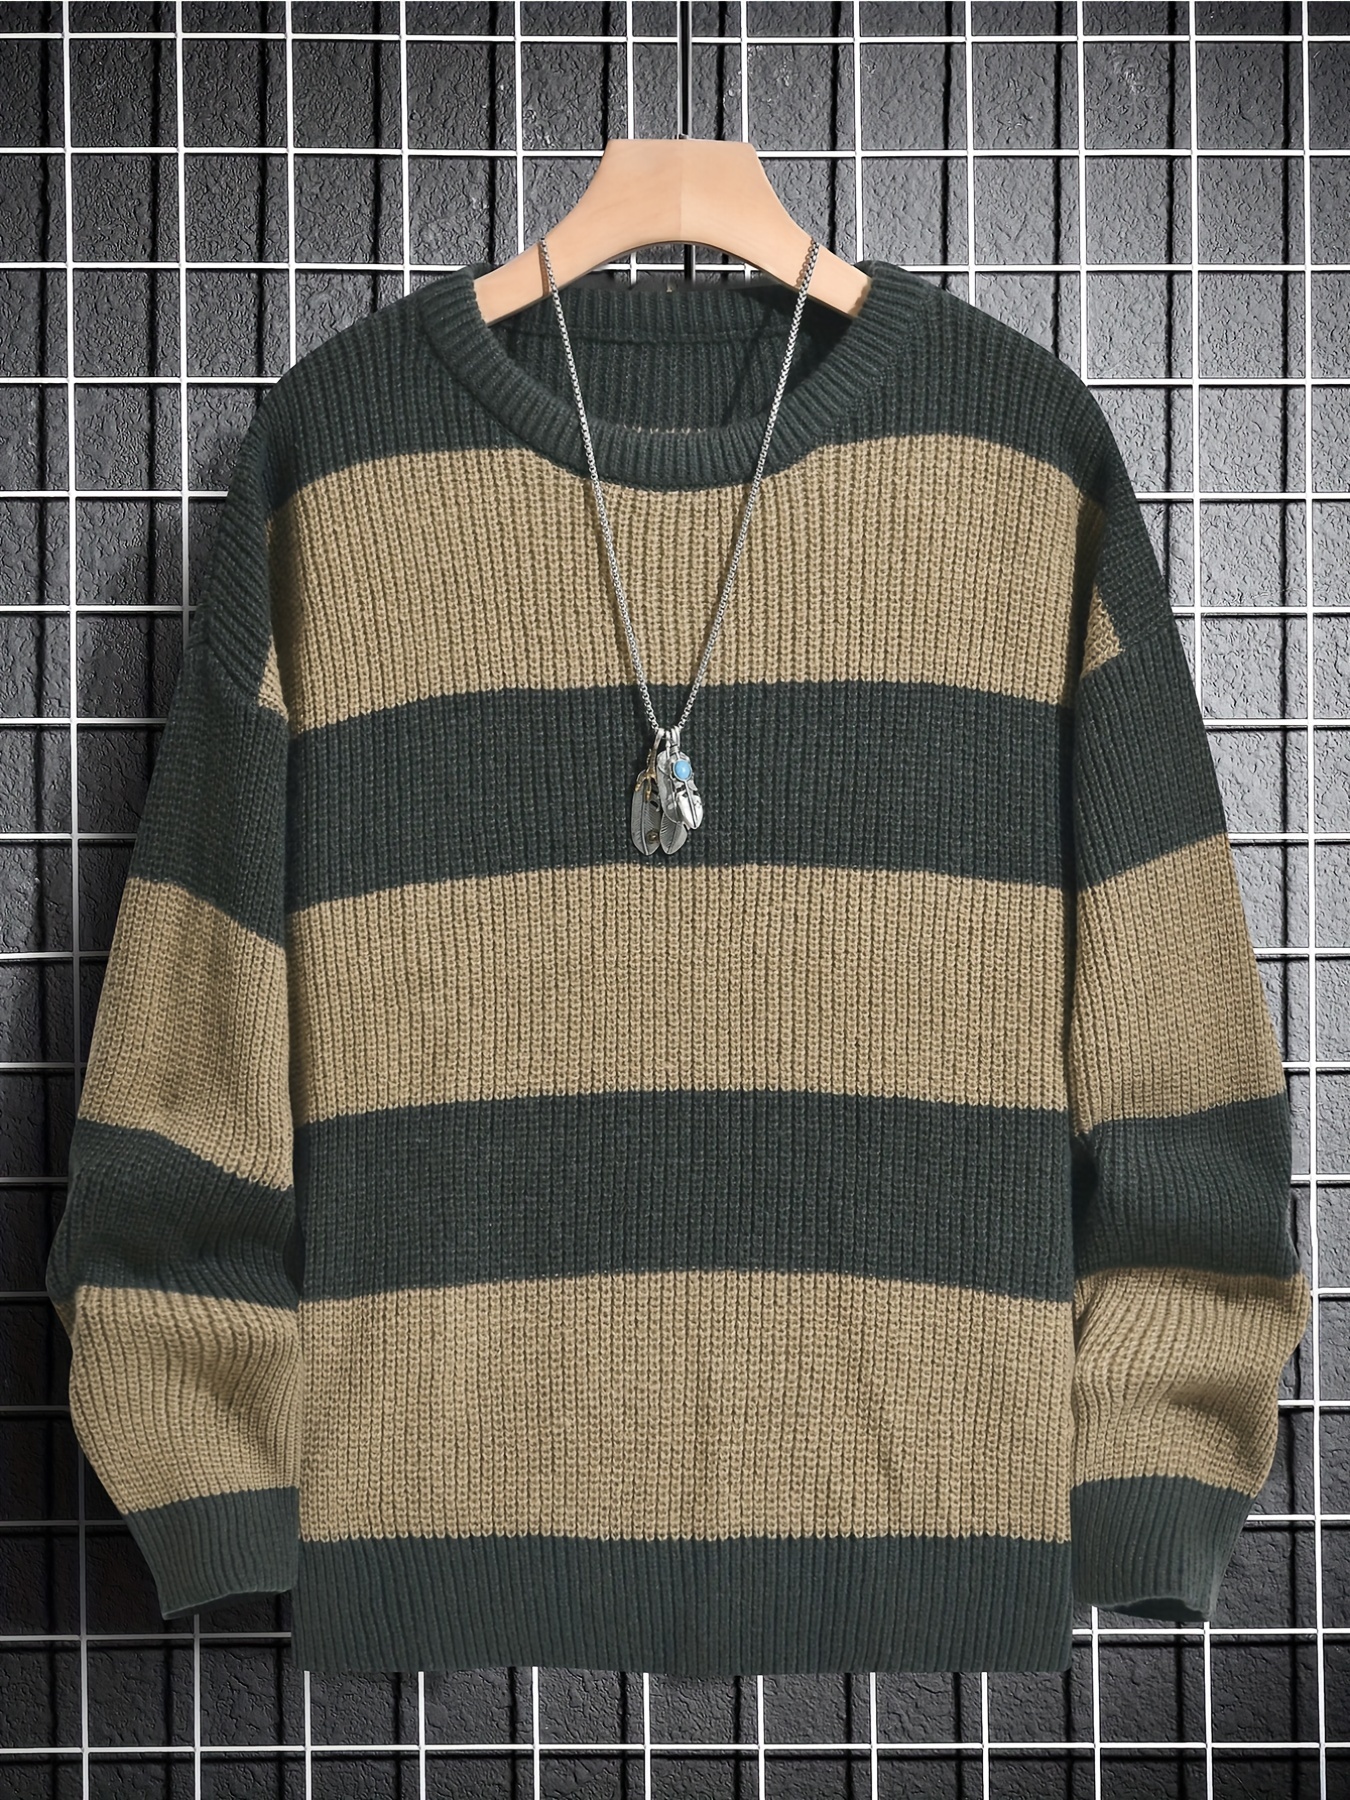 Stylish Colorblocked Striped Sweater